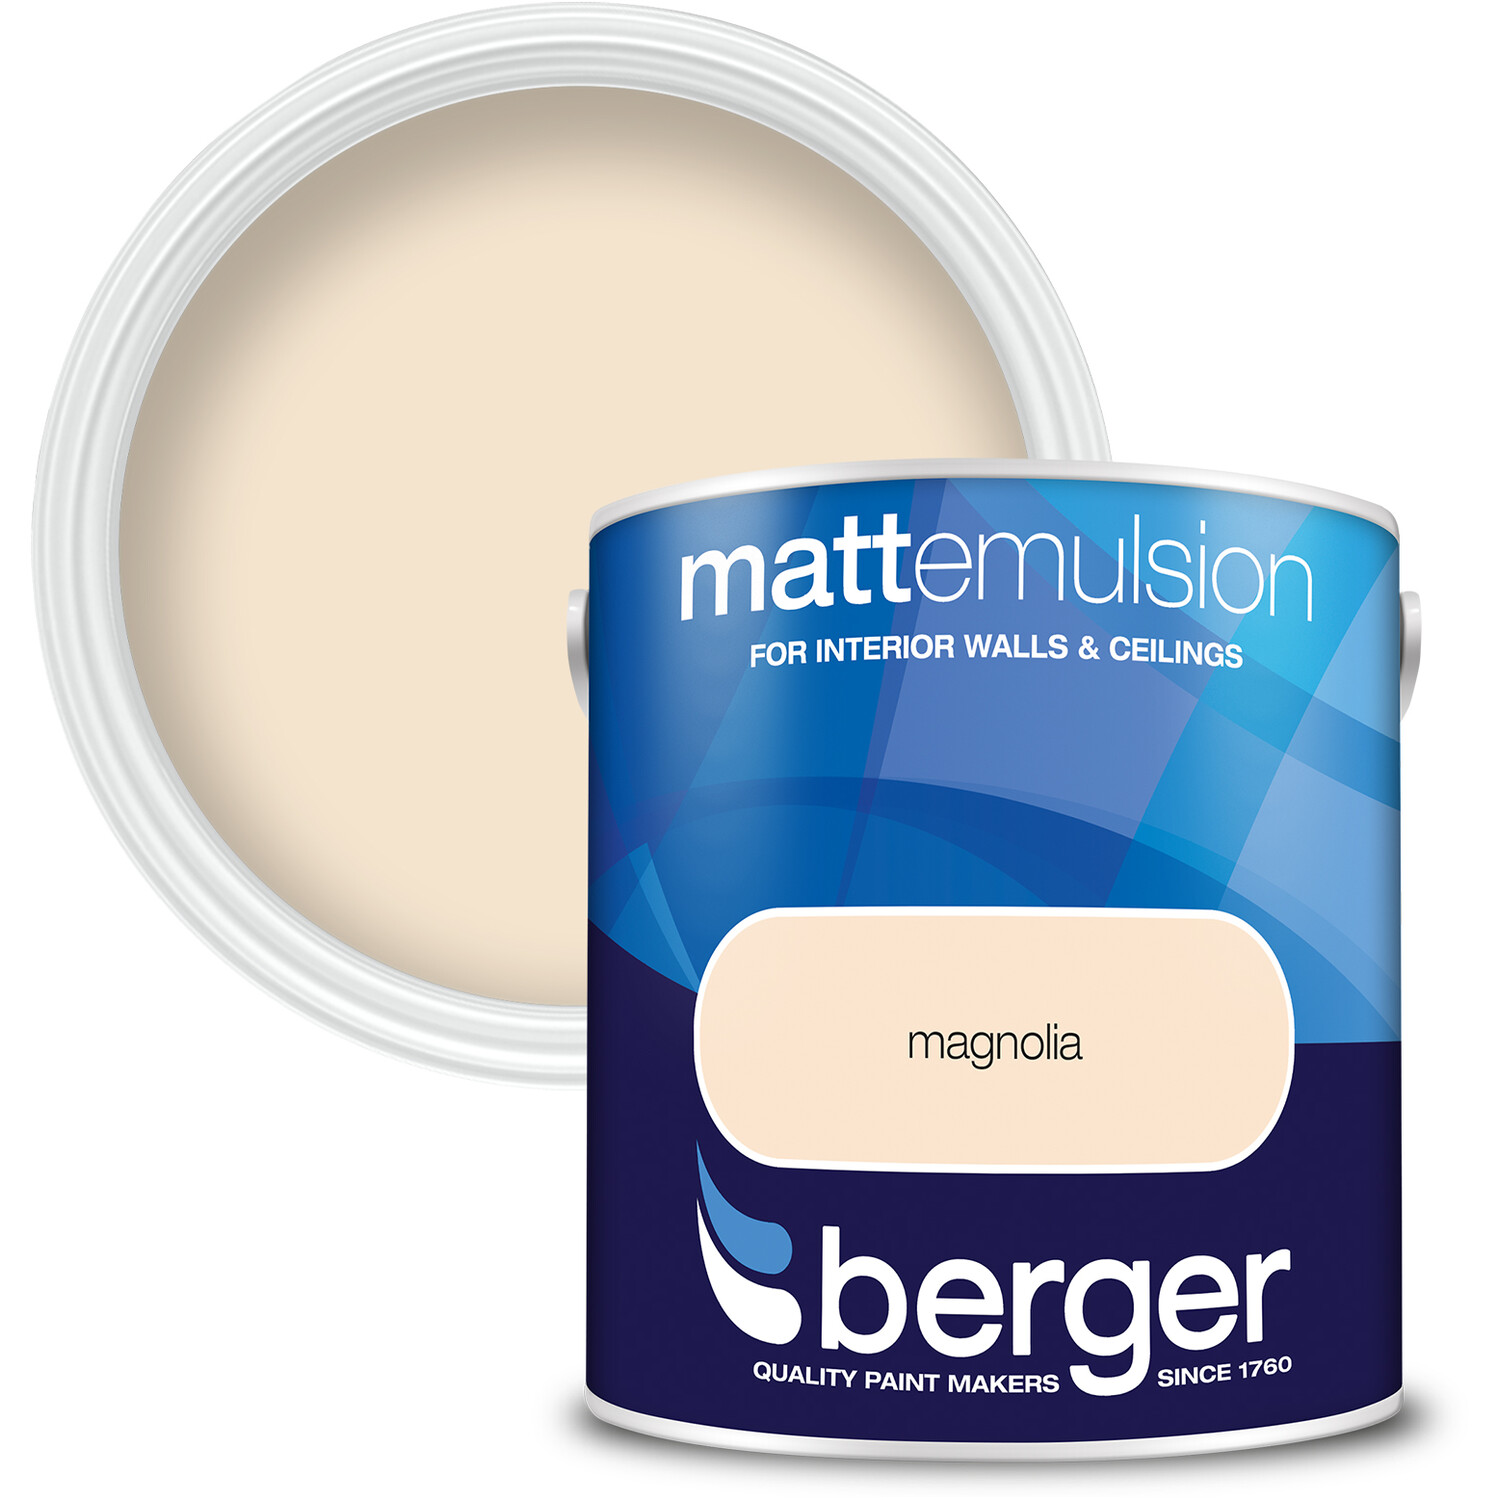 Berger Walls & Ceilings Magnolia Matt Emulsion Paint 2.5L Image 1